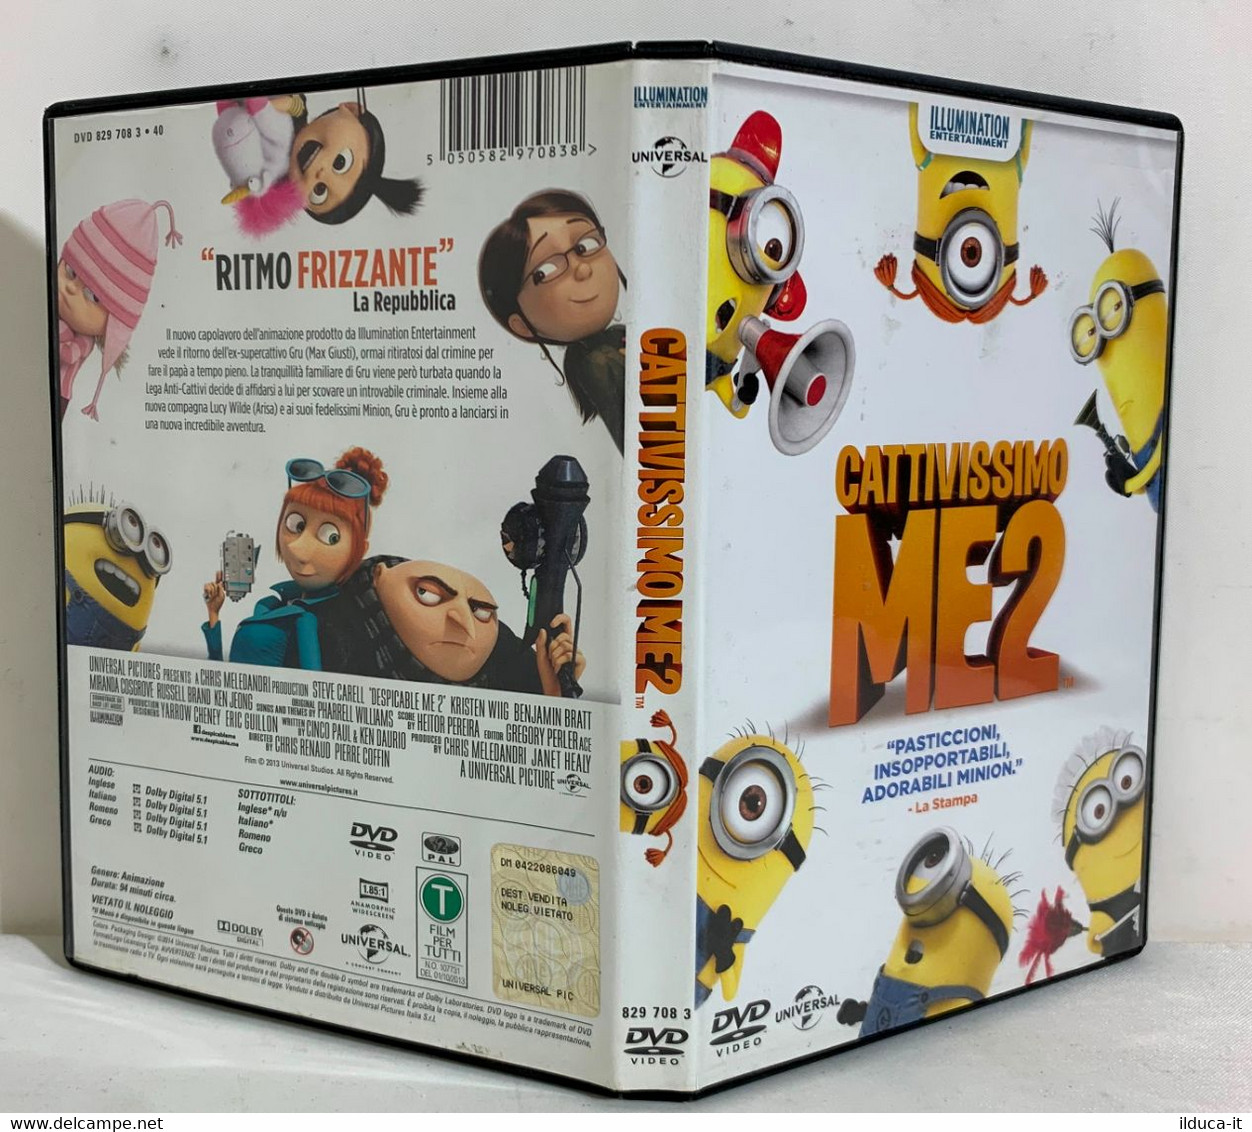 I102353 DVD - Cattivissimo Me 2 - Illumination Entertainment - Animation